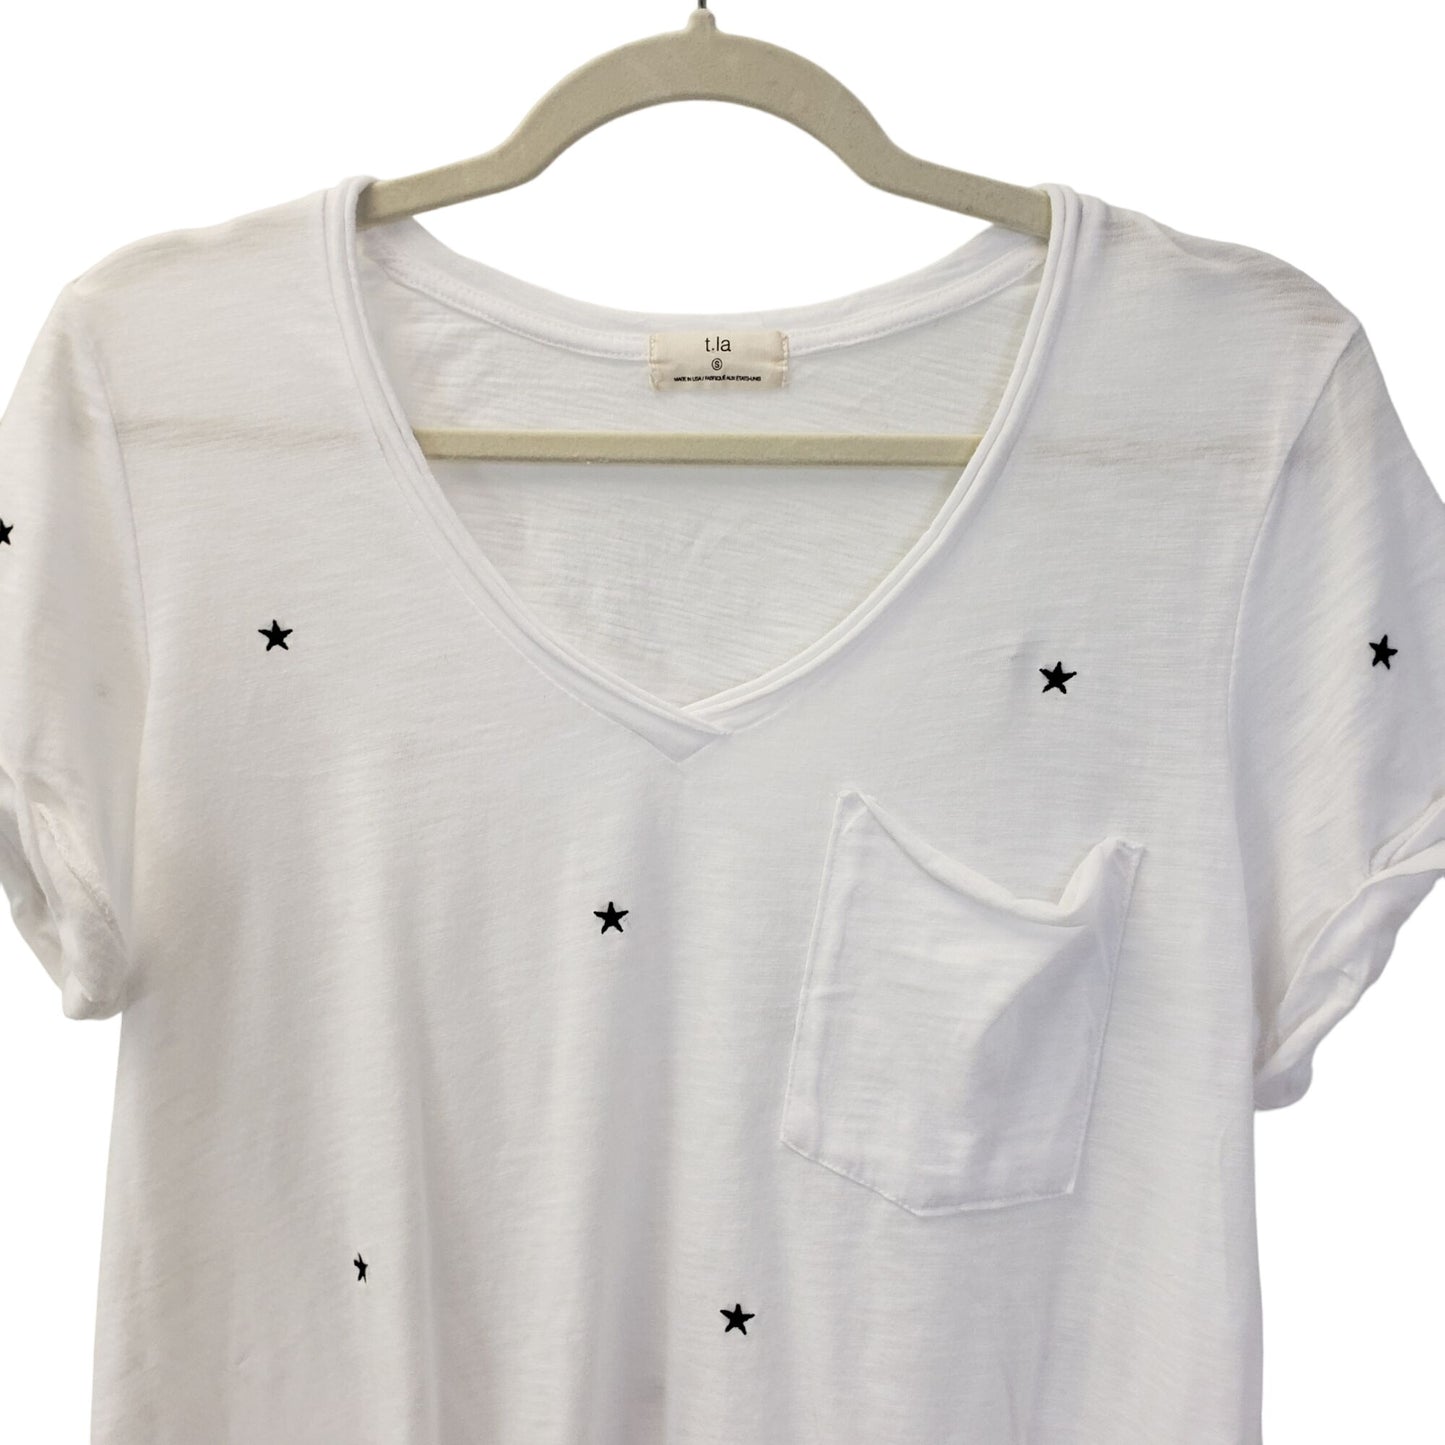 Anthropologie t.la Star Print Short Sleeve Slub T-shirt Size Small